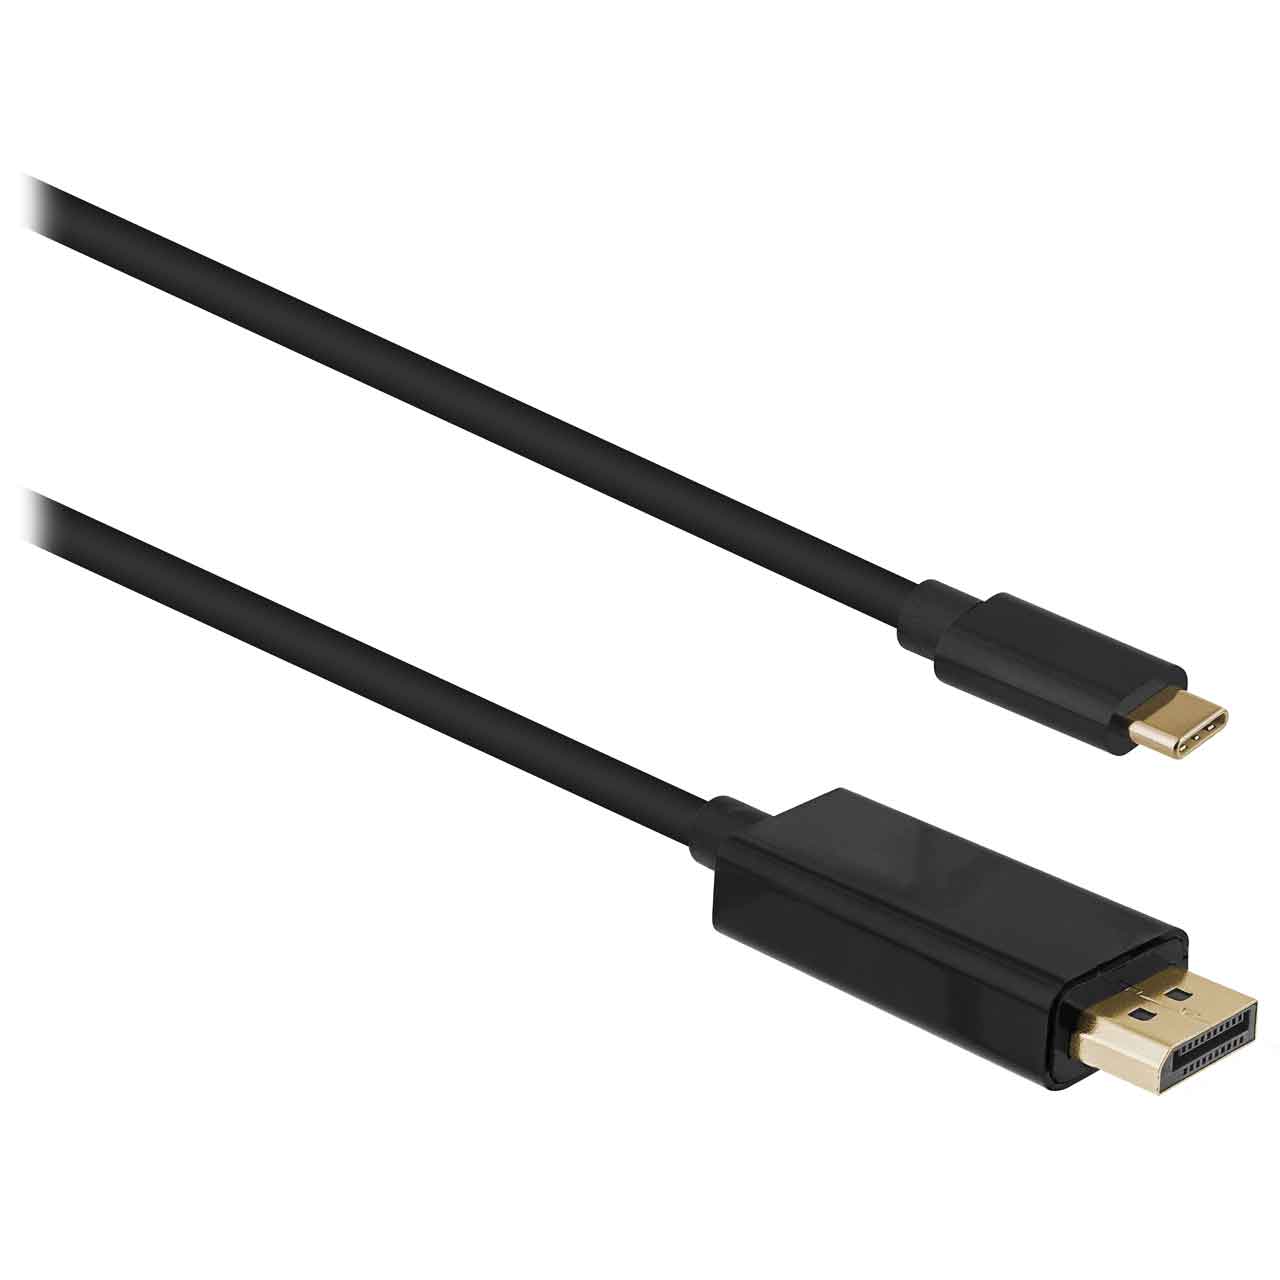 TNB TCDP2 USB-C / DISPLAY PORT CABLE 2M